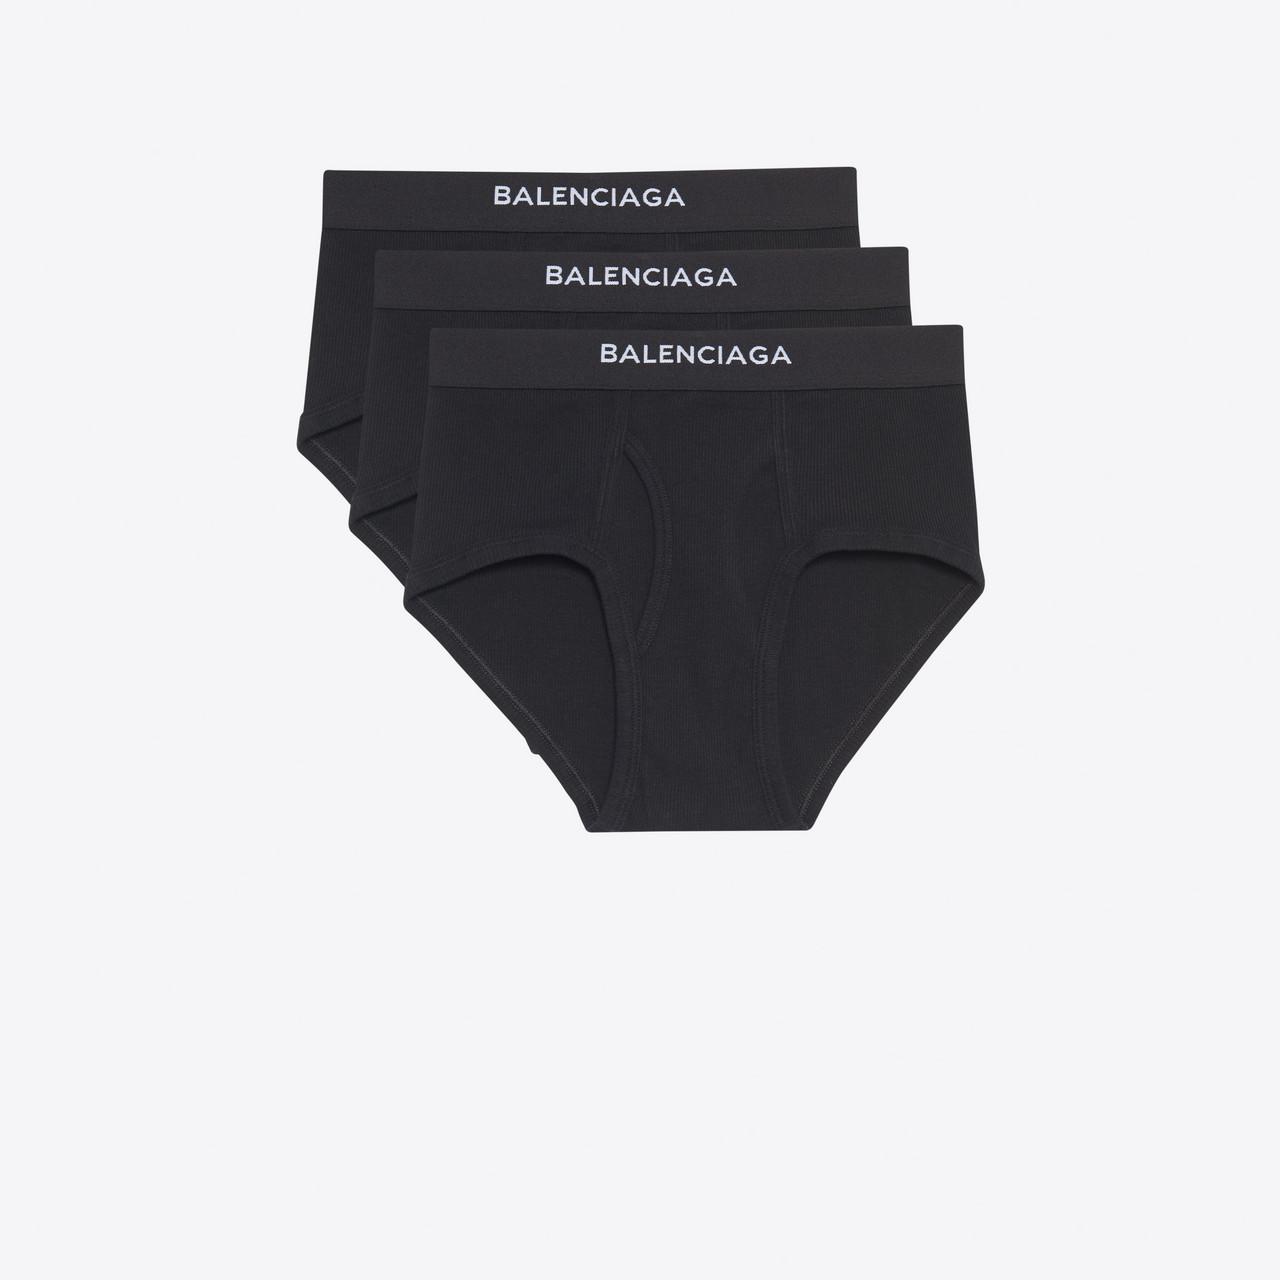 Balenciaga Cotton Three-pack Briefs in Black for Men - Lyst